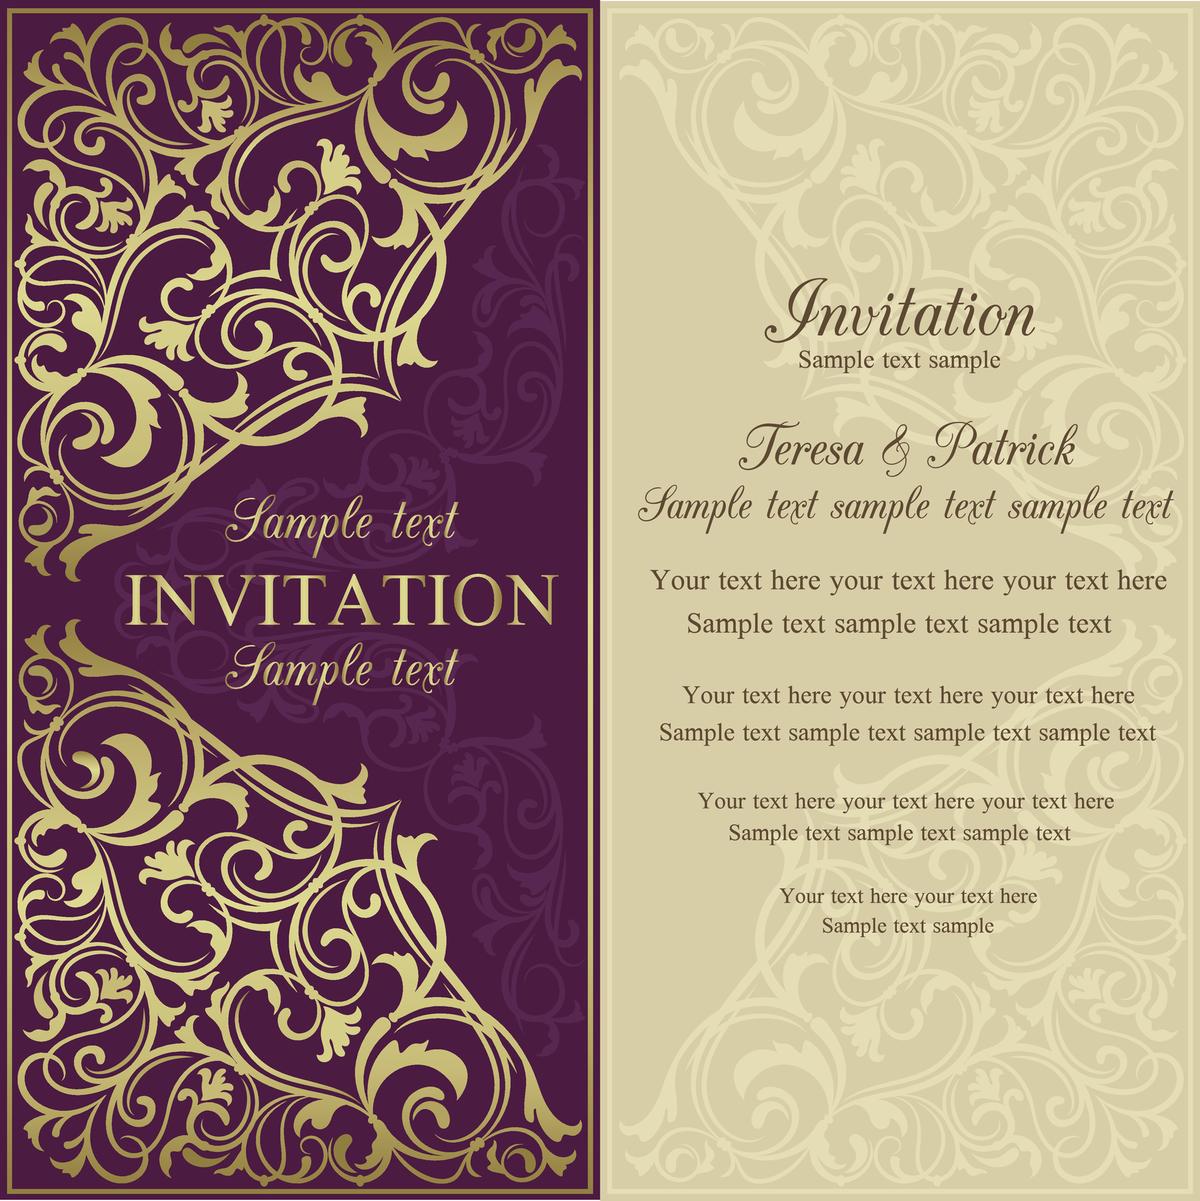 Sample invitation letter